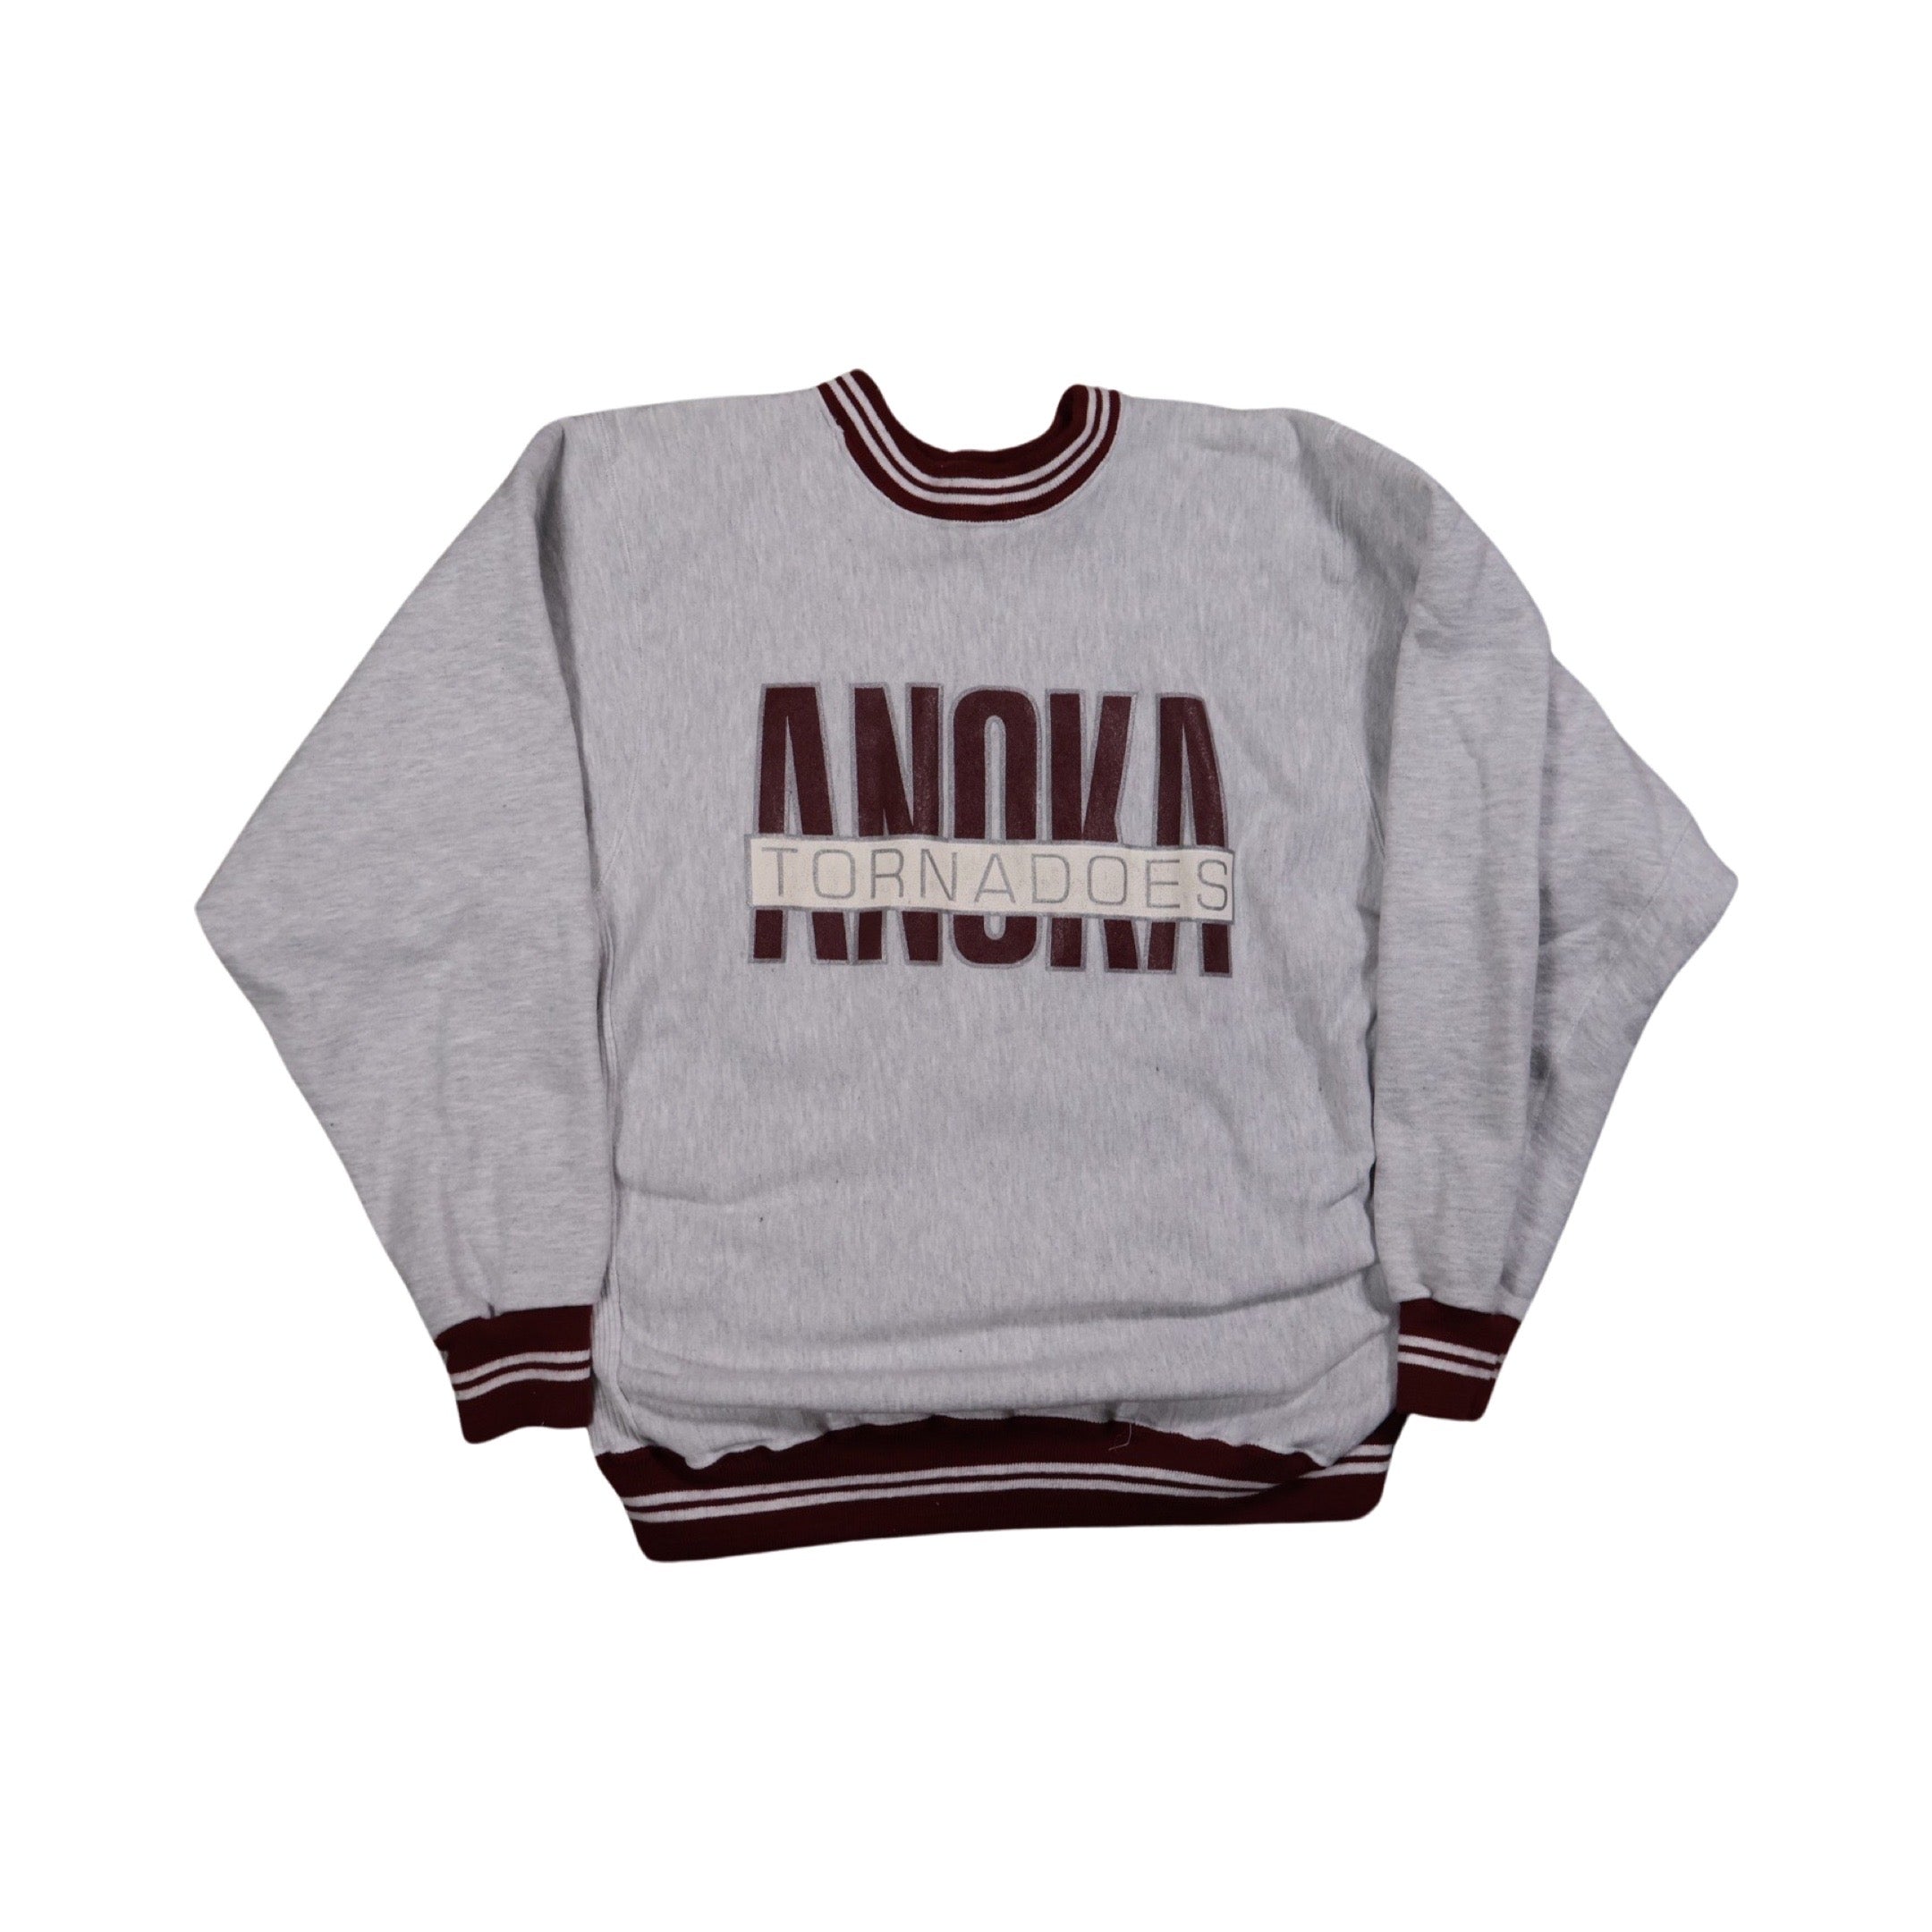 Anoka Tornadoes 90s Cuffed Sweater (XL)